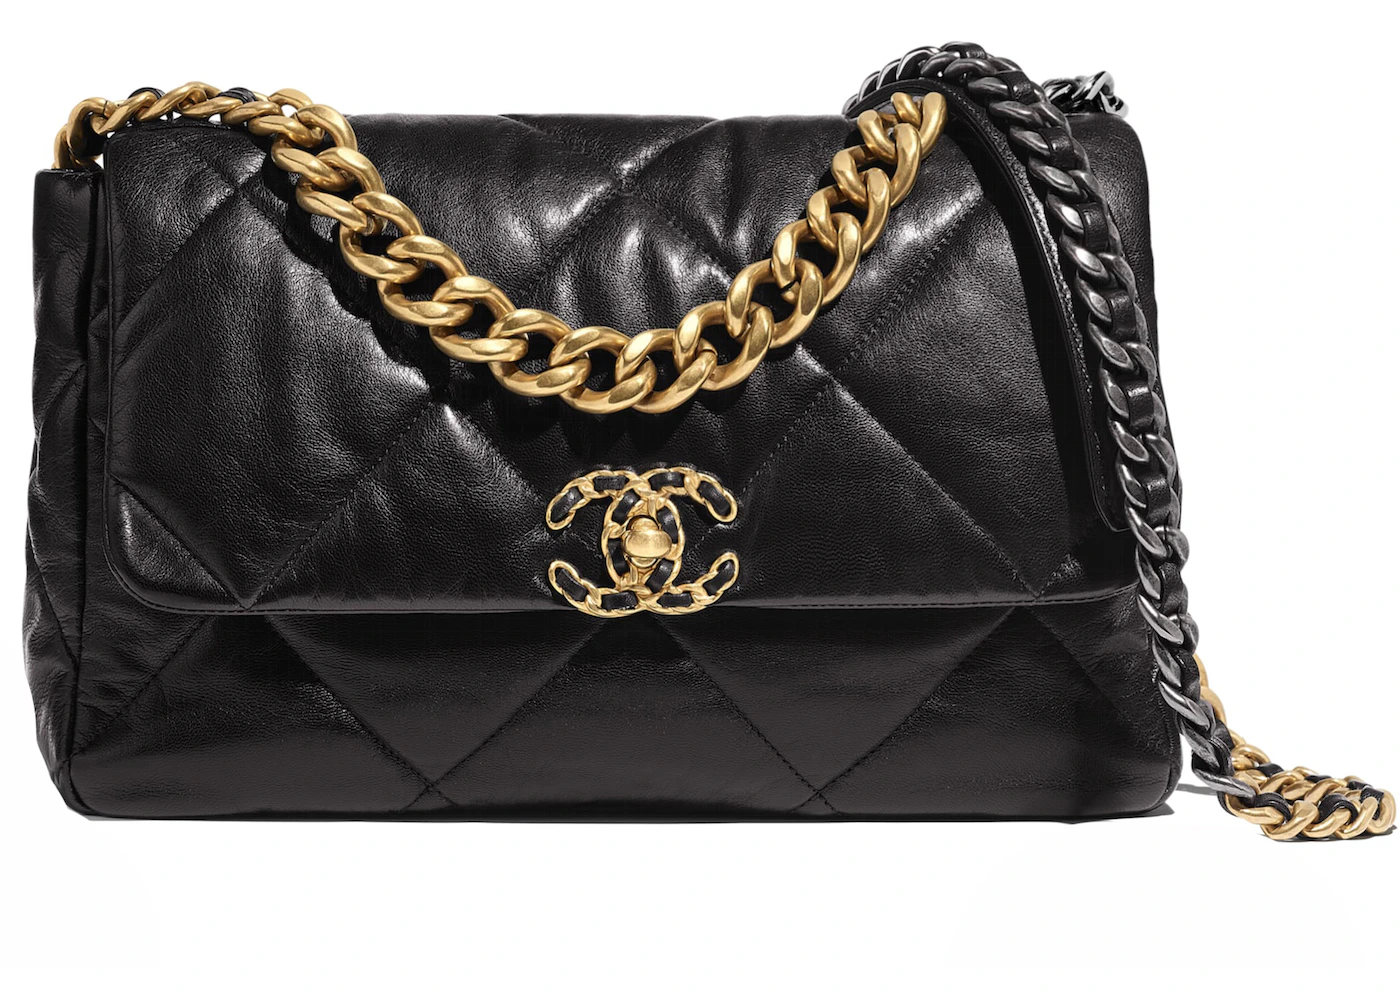 Chanel 19 Flap Bag Lambskin Large Black in Lambskin with Ruthenium